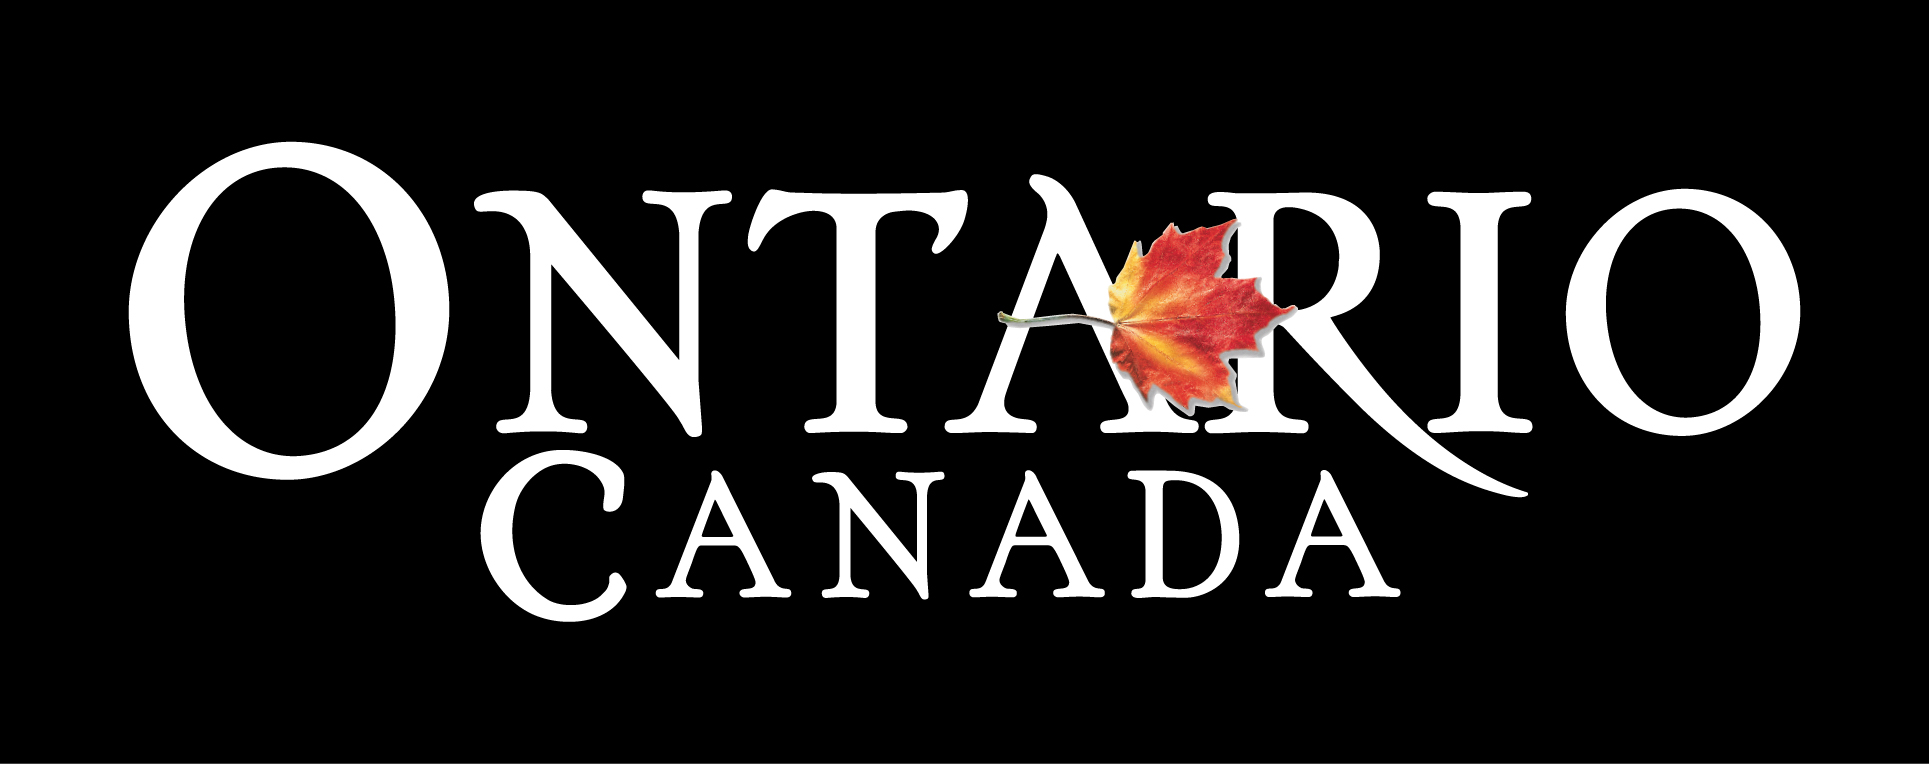 Logos de l'Ontario, Canada - Quadricolore inversé